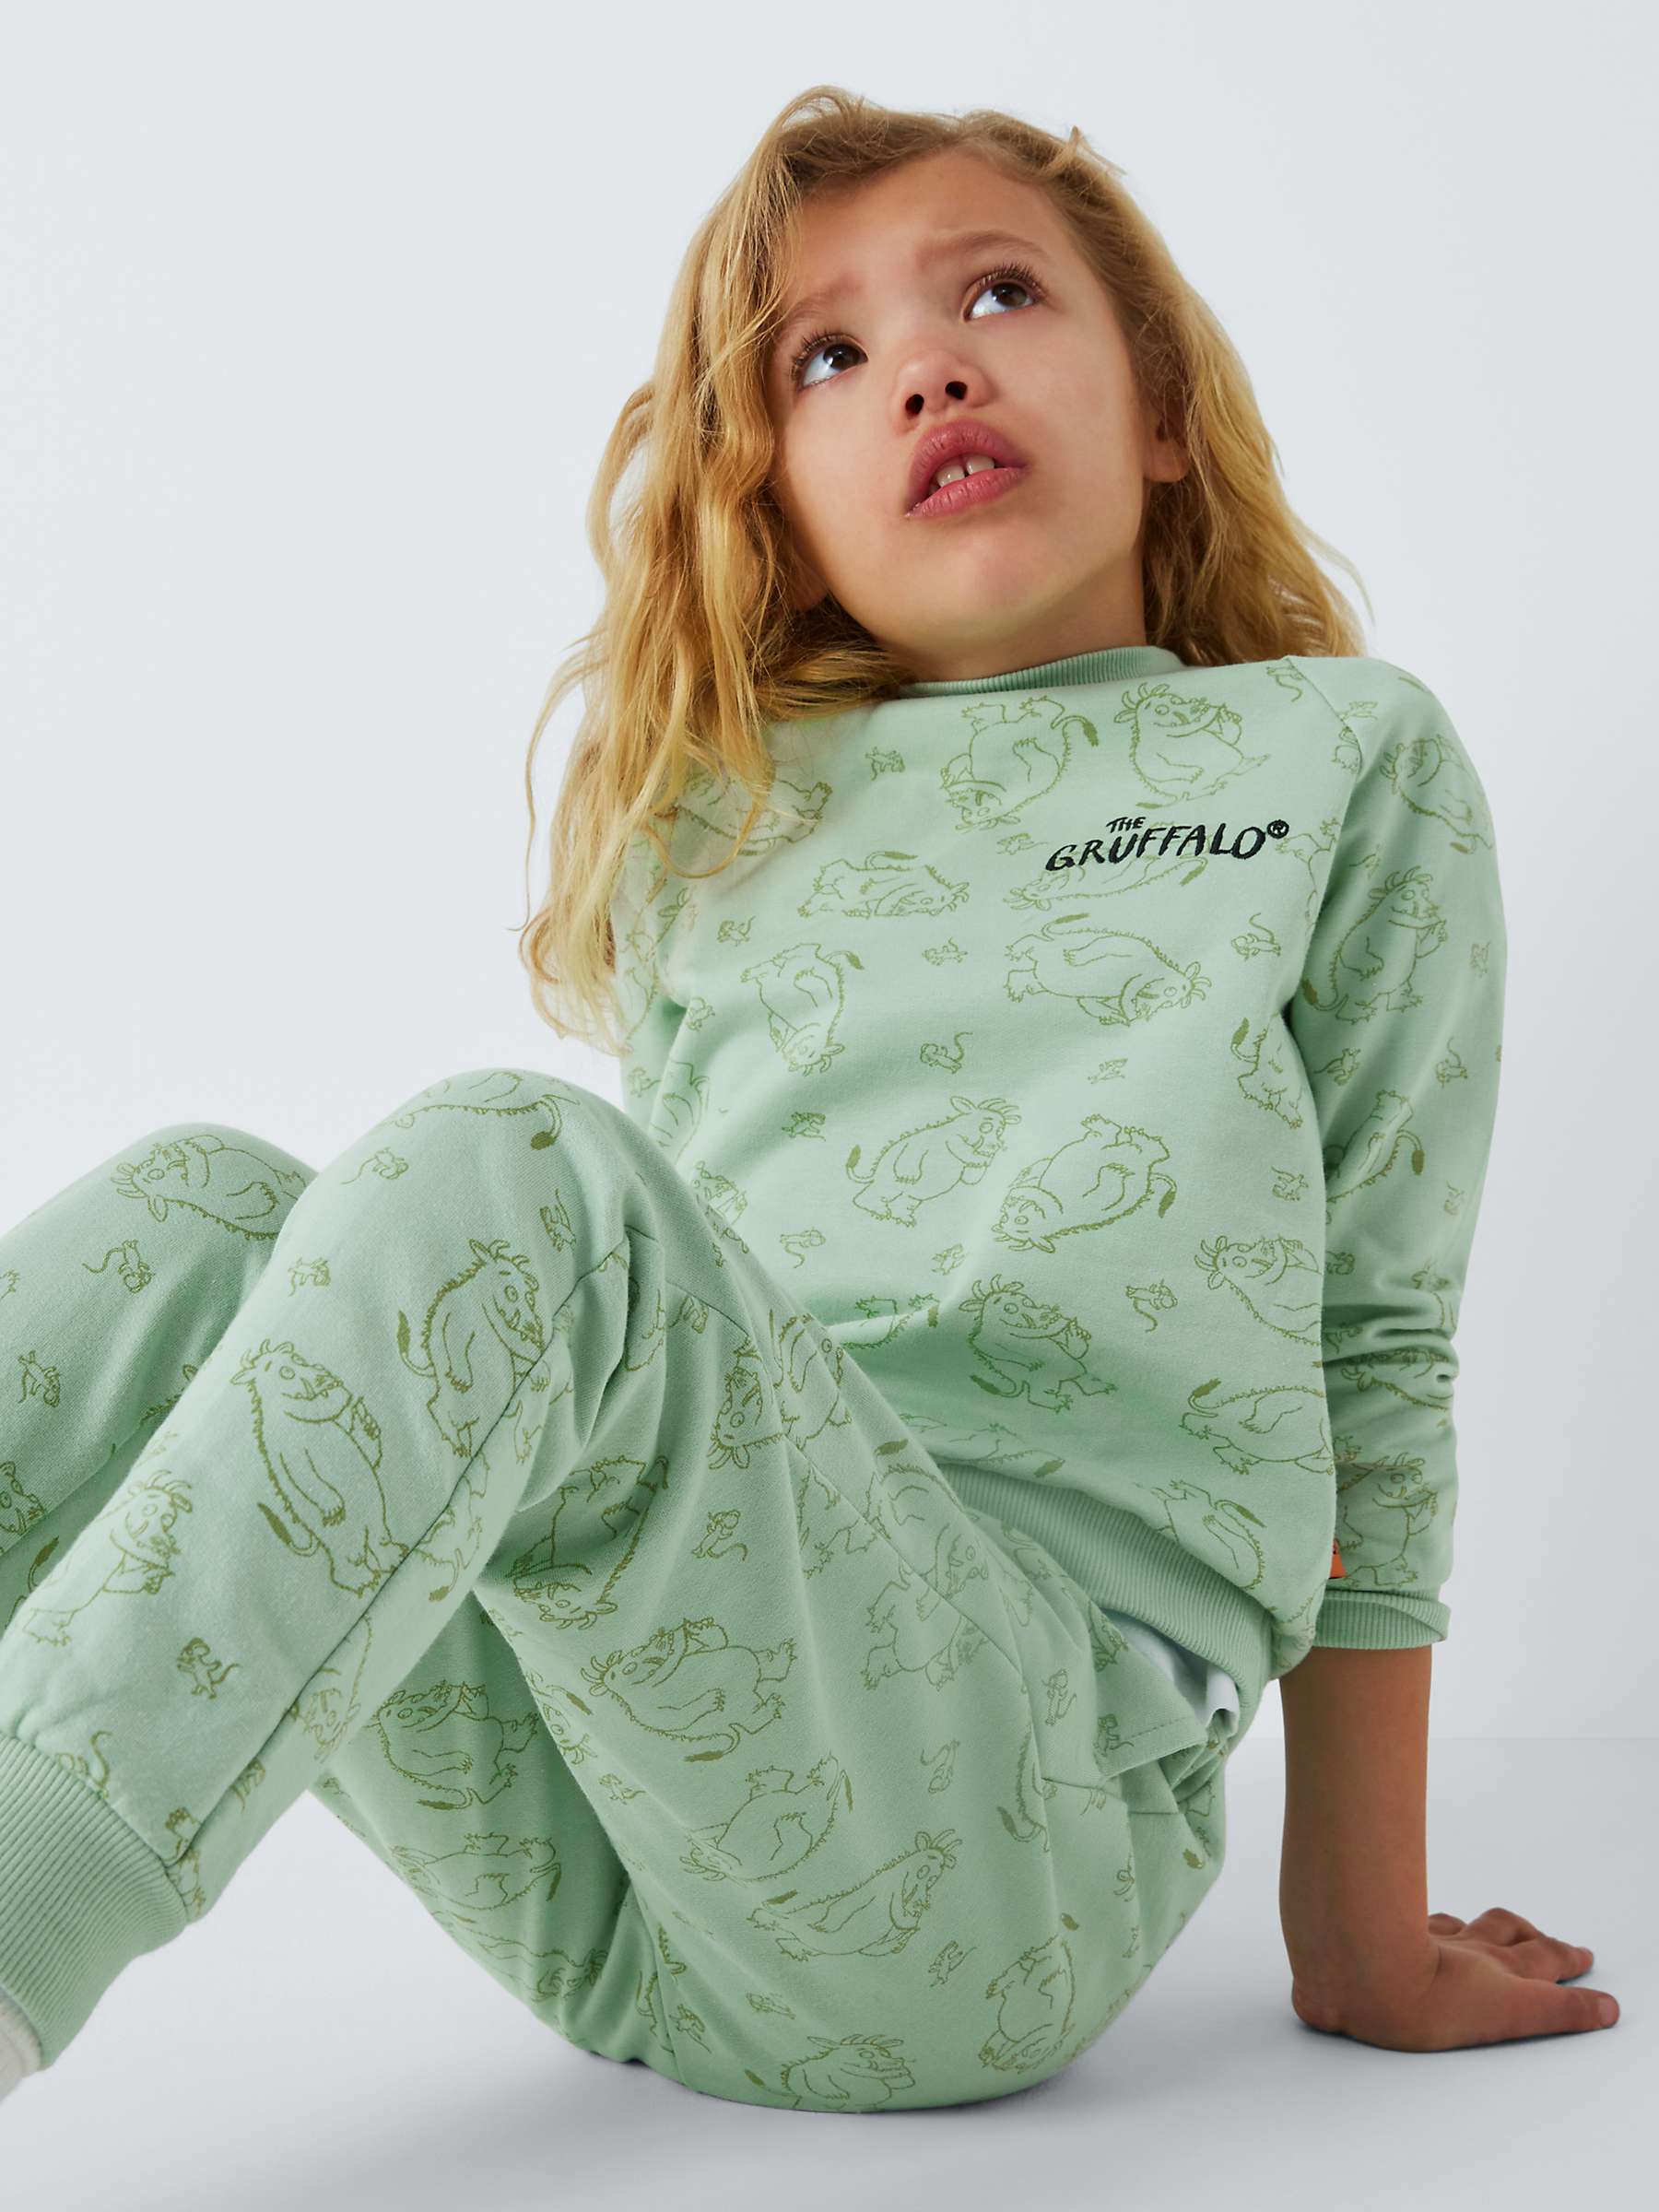 Buy Brand Threads Kids' Gruffalo Tracksuit Set, Green Online at johnlewis.com